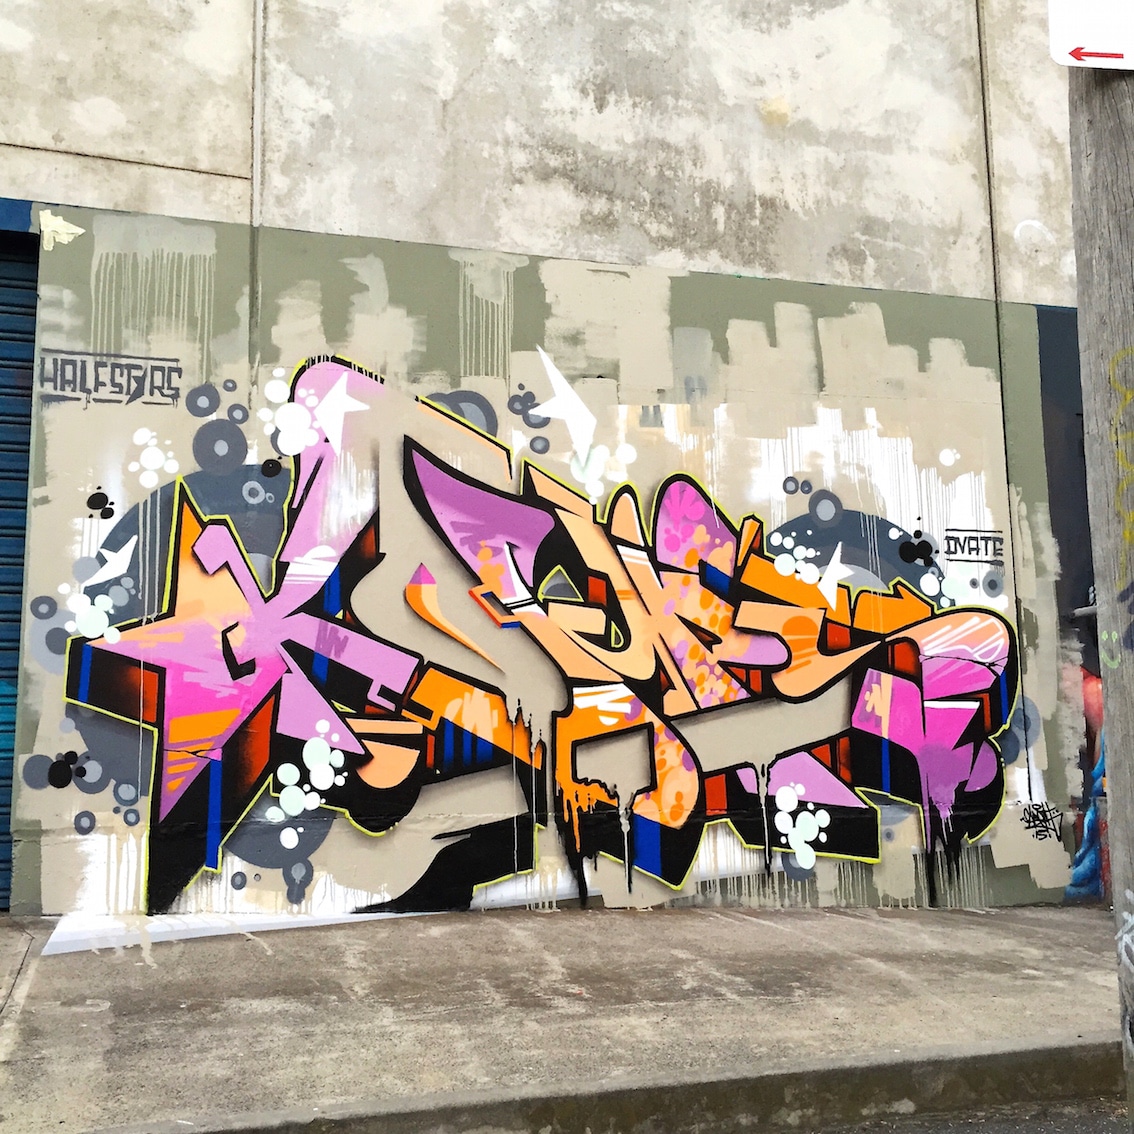 Sunshines Top 10 Melbourne Street Art & Graffiti – January 2015